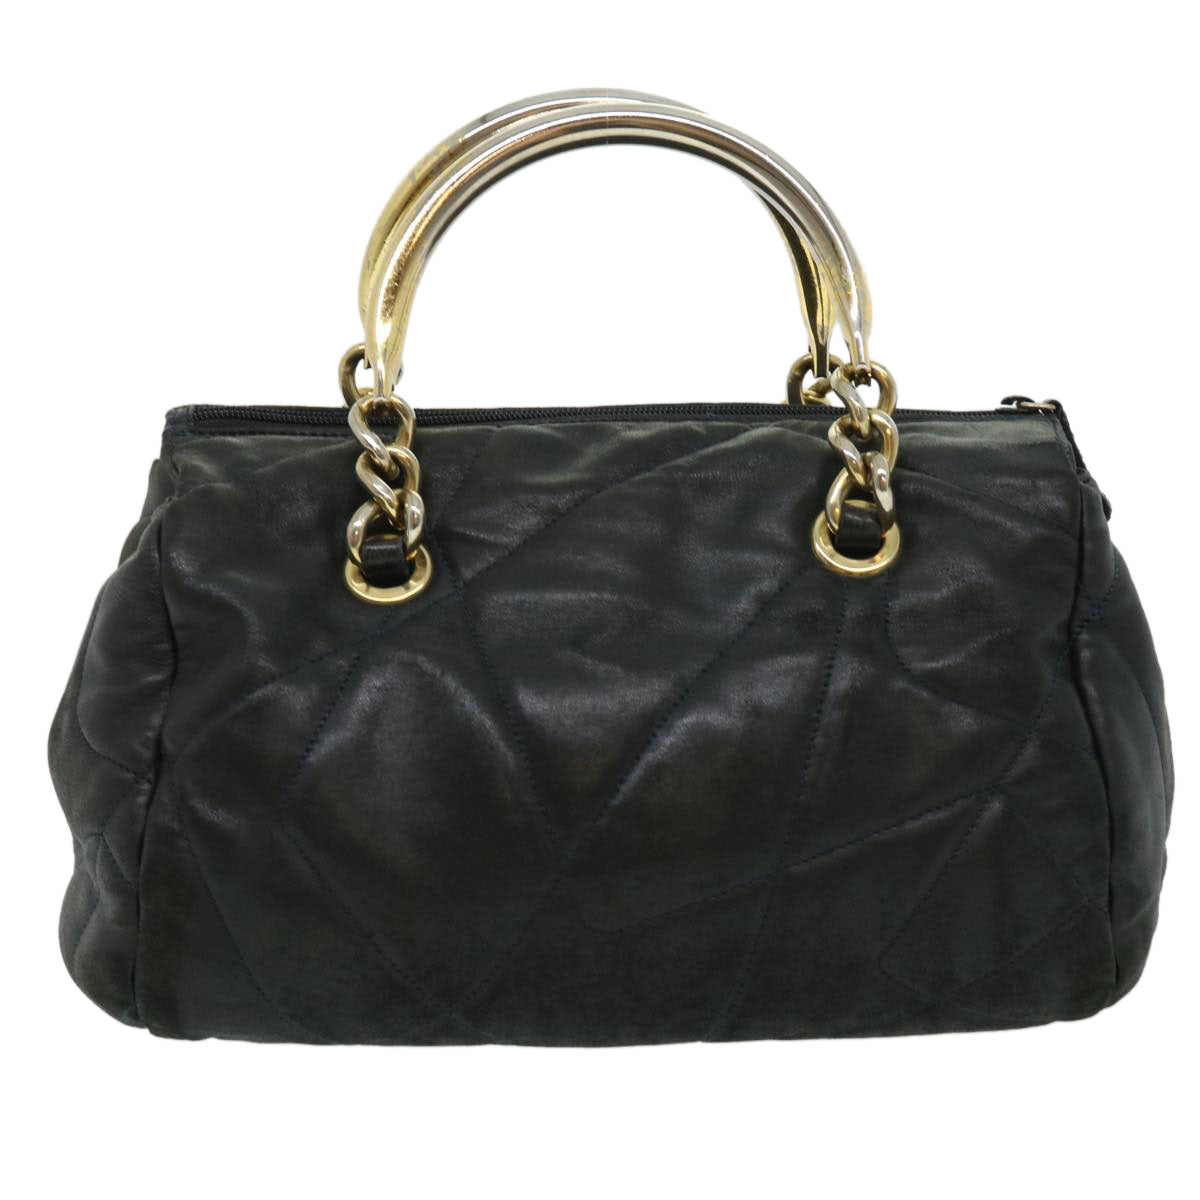 PRADA Quilted Hand Bag Leather Black Auth im370 - 0